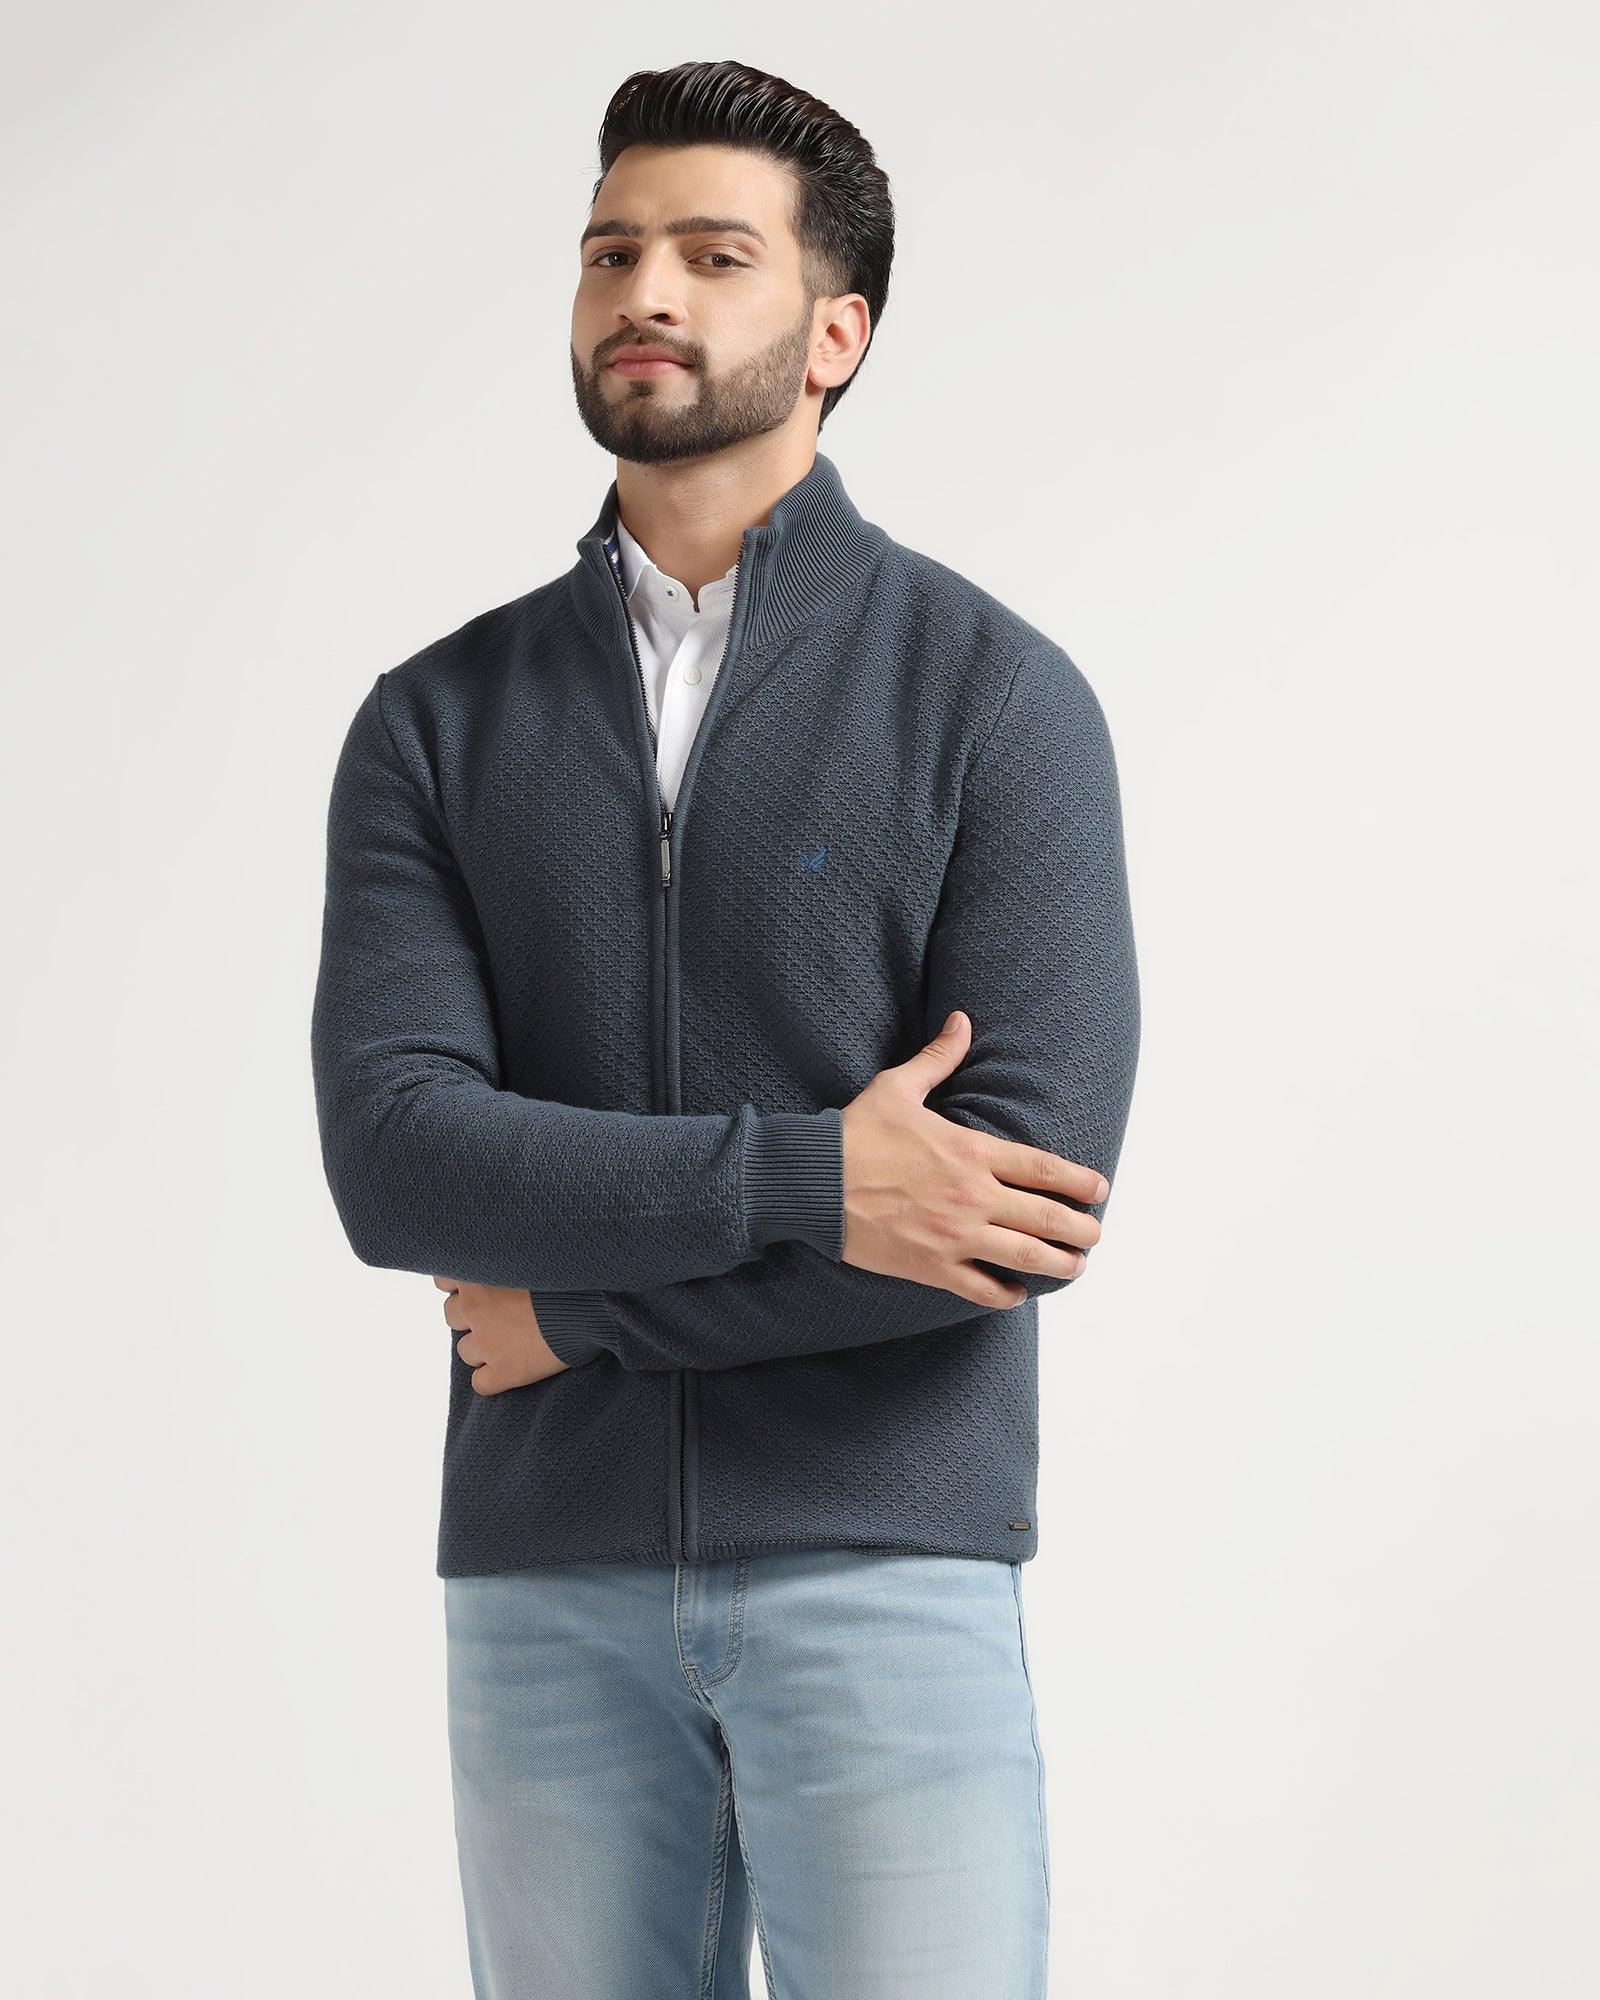 High Neck Maroon Textured Sweater - Jeremy